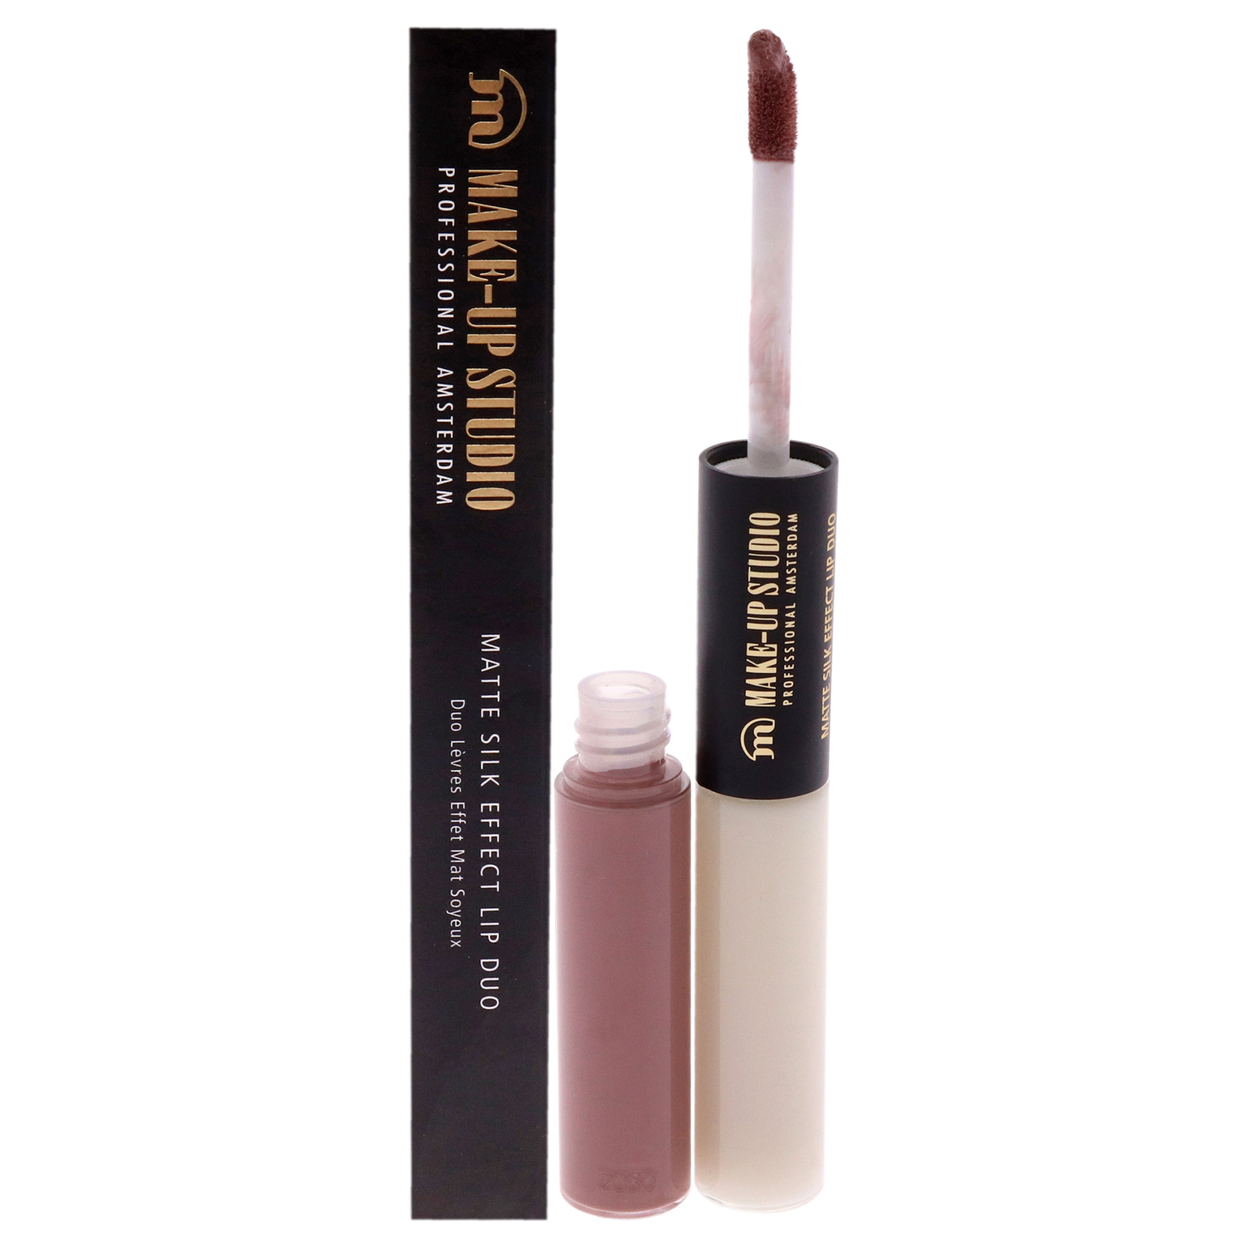 Make-Up Studio Matte Silk Effect Lip Duo - Blushing Nude Lipstick 0.2 Oz